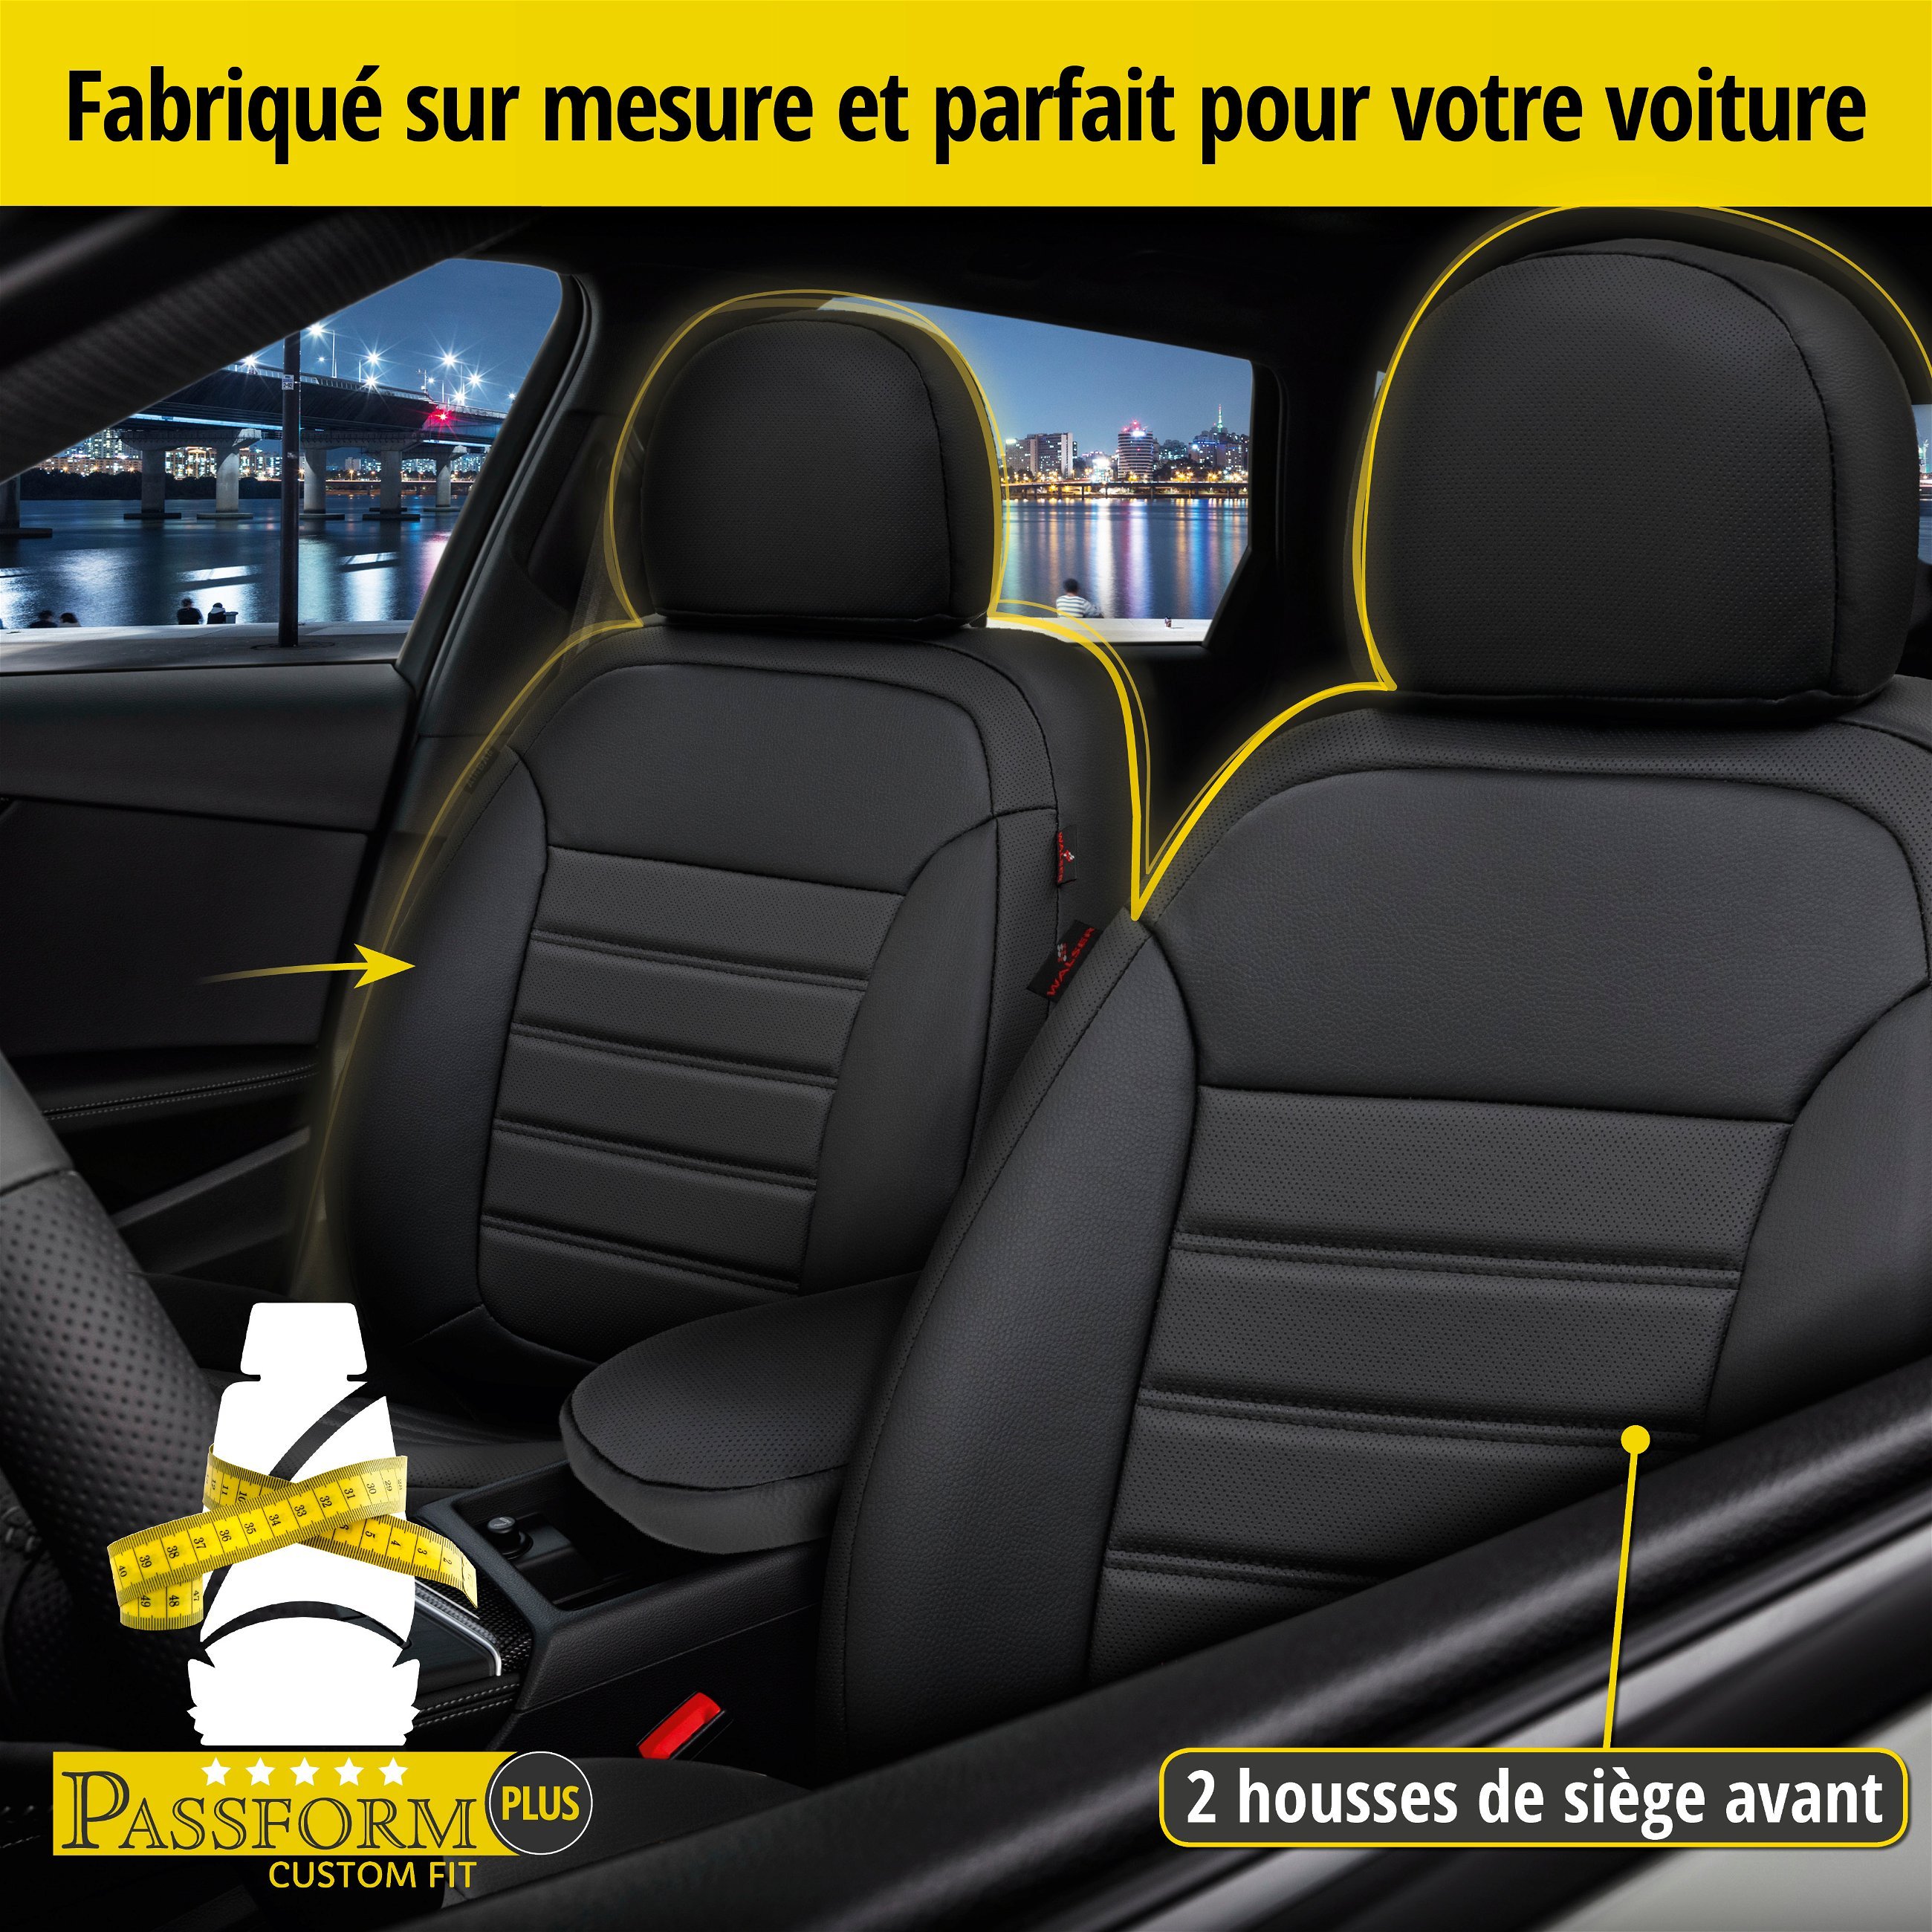 Housse de siège Robusto pour Renault Clio III BR0/1, CR0/1 01/2005-12/2014, 2 housses de siège pour sièges normaux